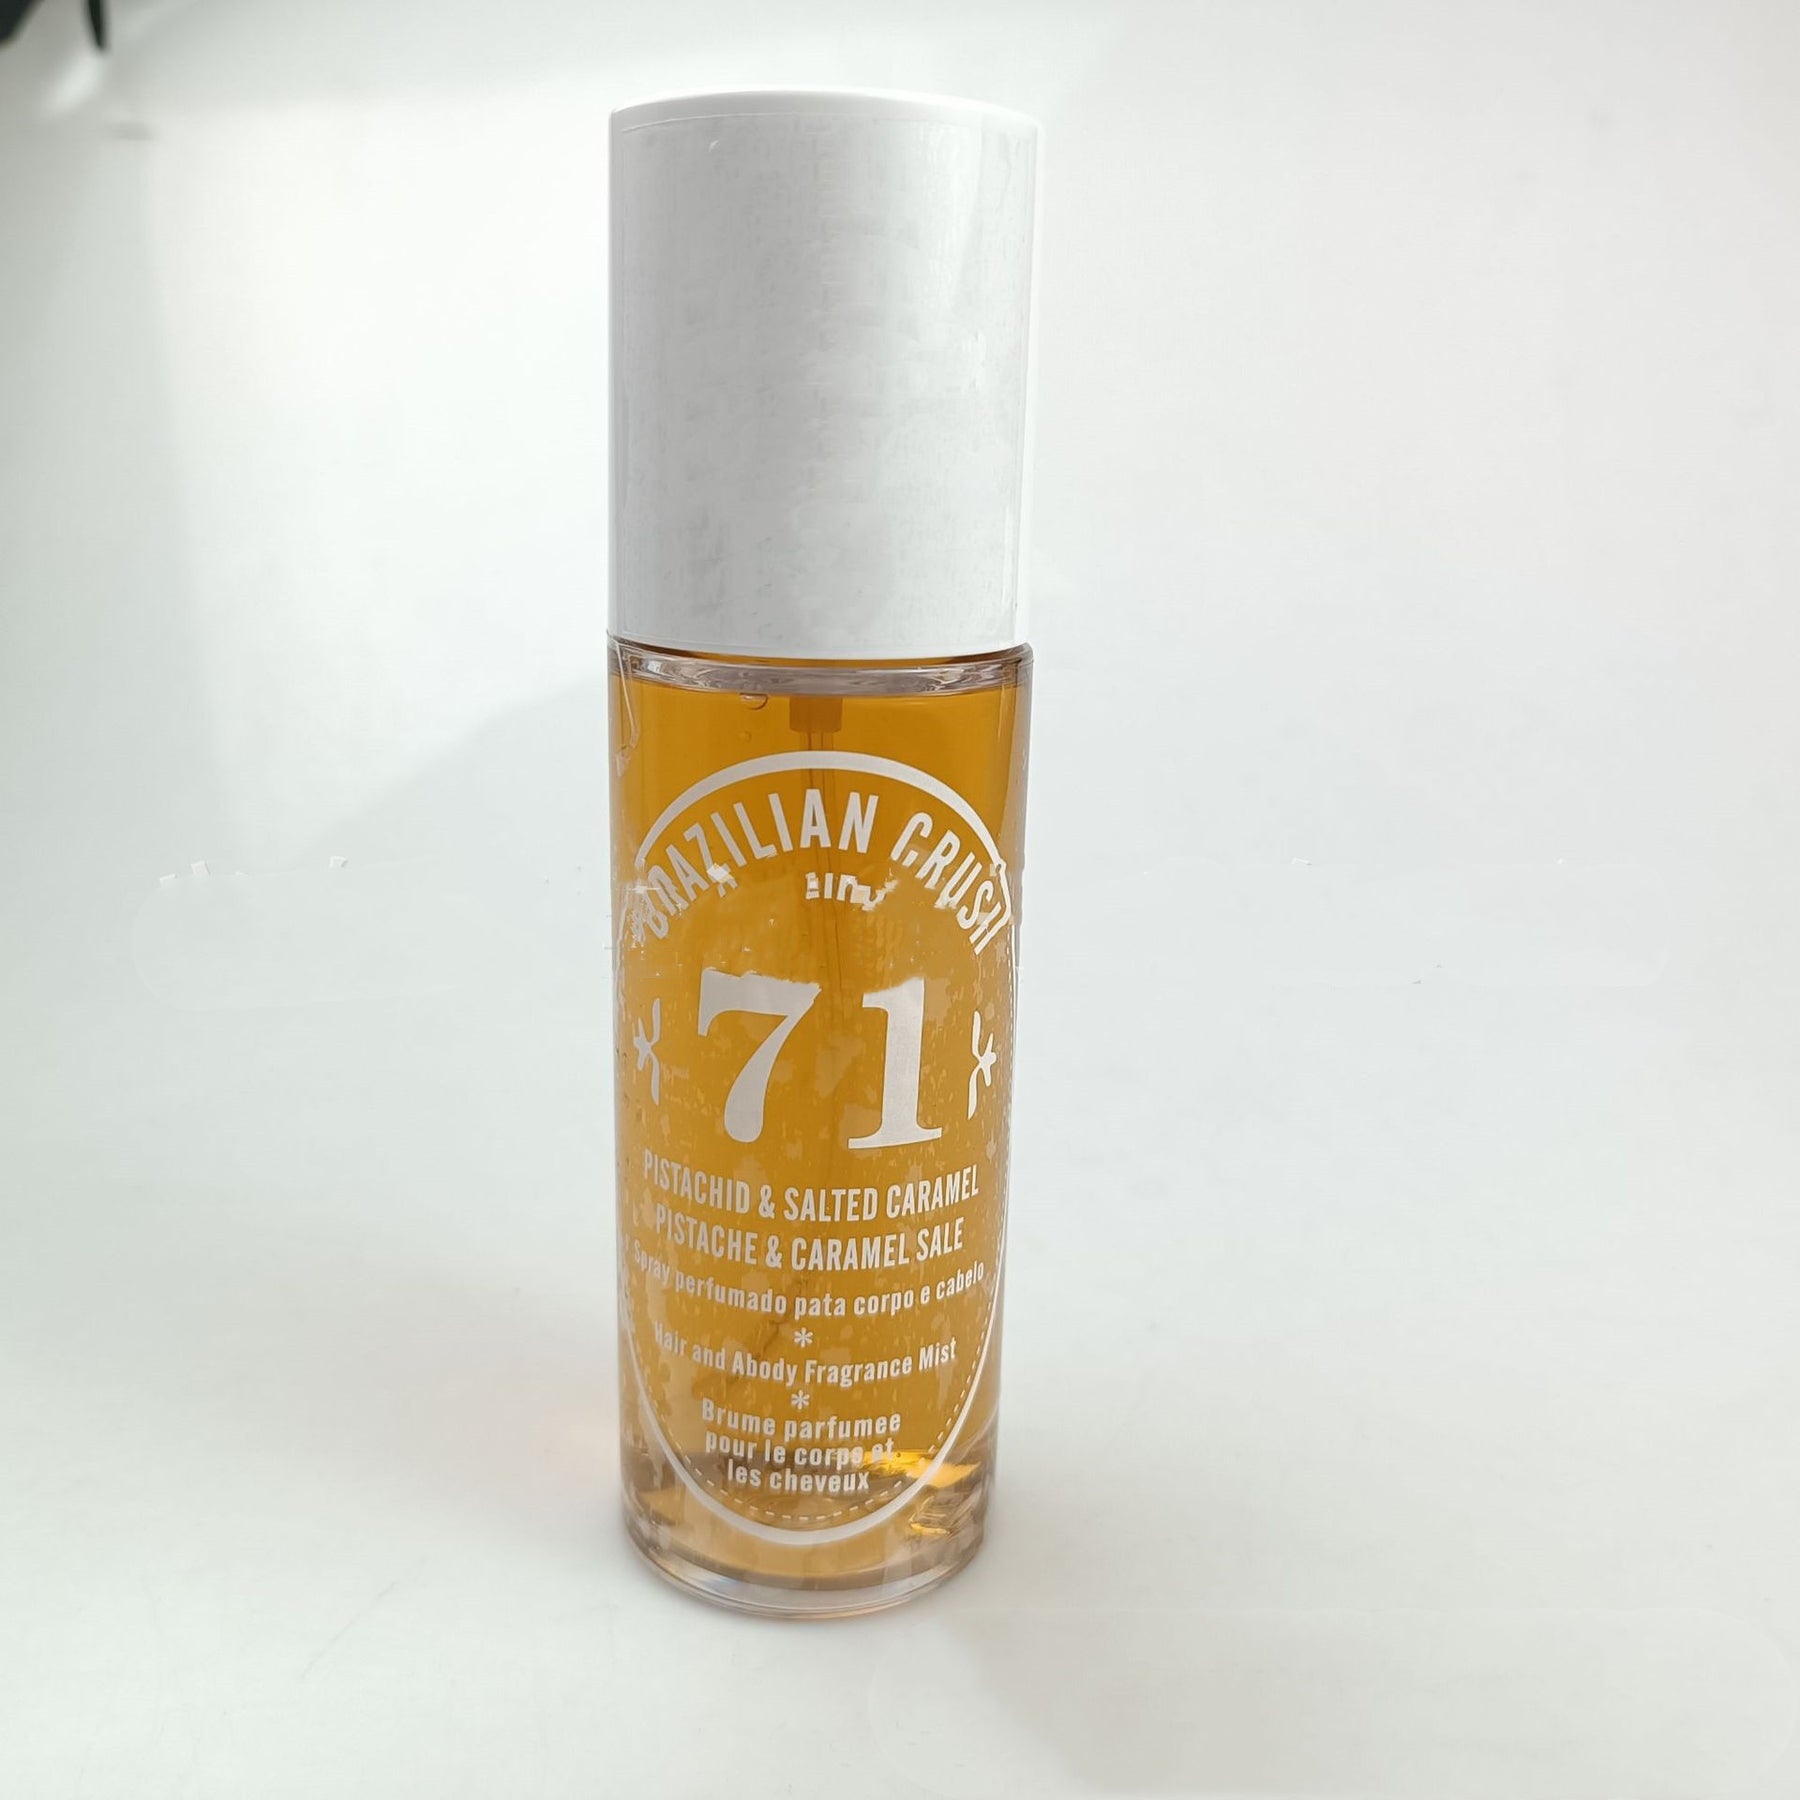 100ml Bottled Perfume Crushing Spray - Fragrance Accessories Online